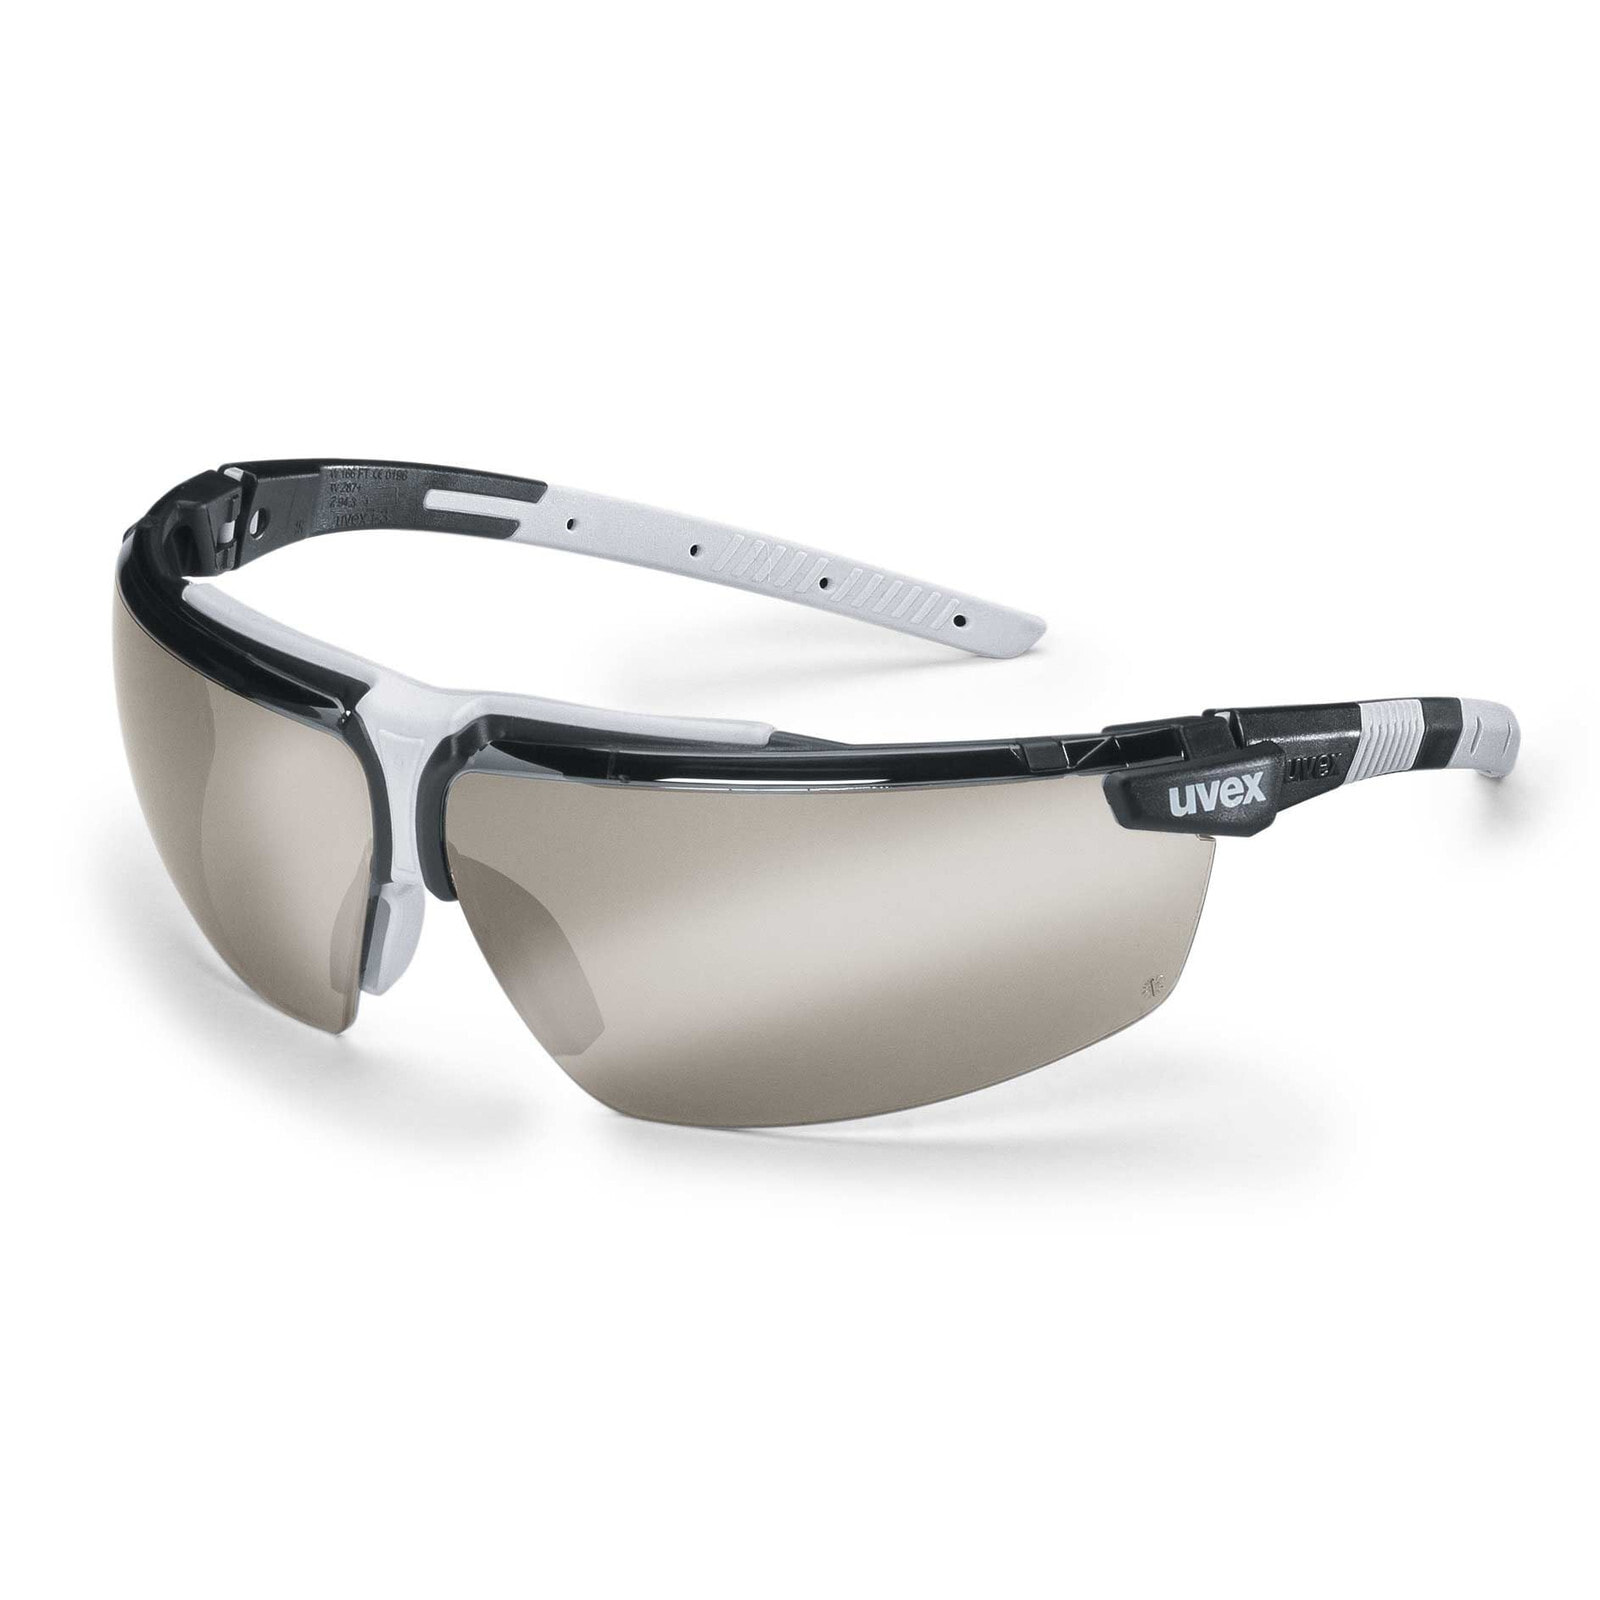 UVEX Arbeitsschutz 9190885 - Safety glasses - Grey - Black - Polycarbonate - 1 pc(s)